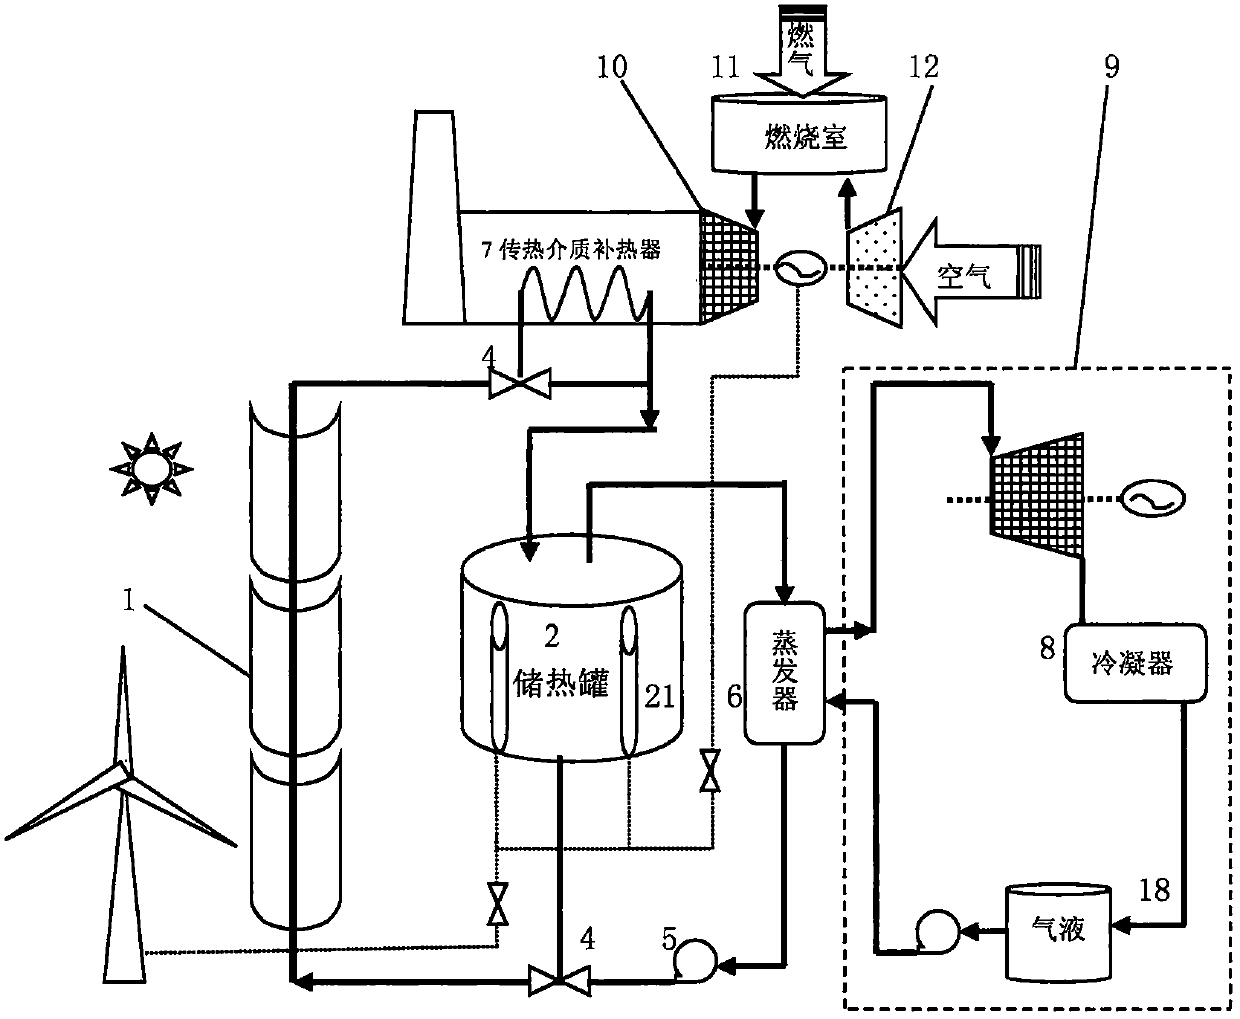 Multi-mode groove-type solar thermal power generator